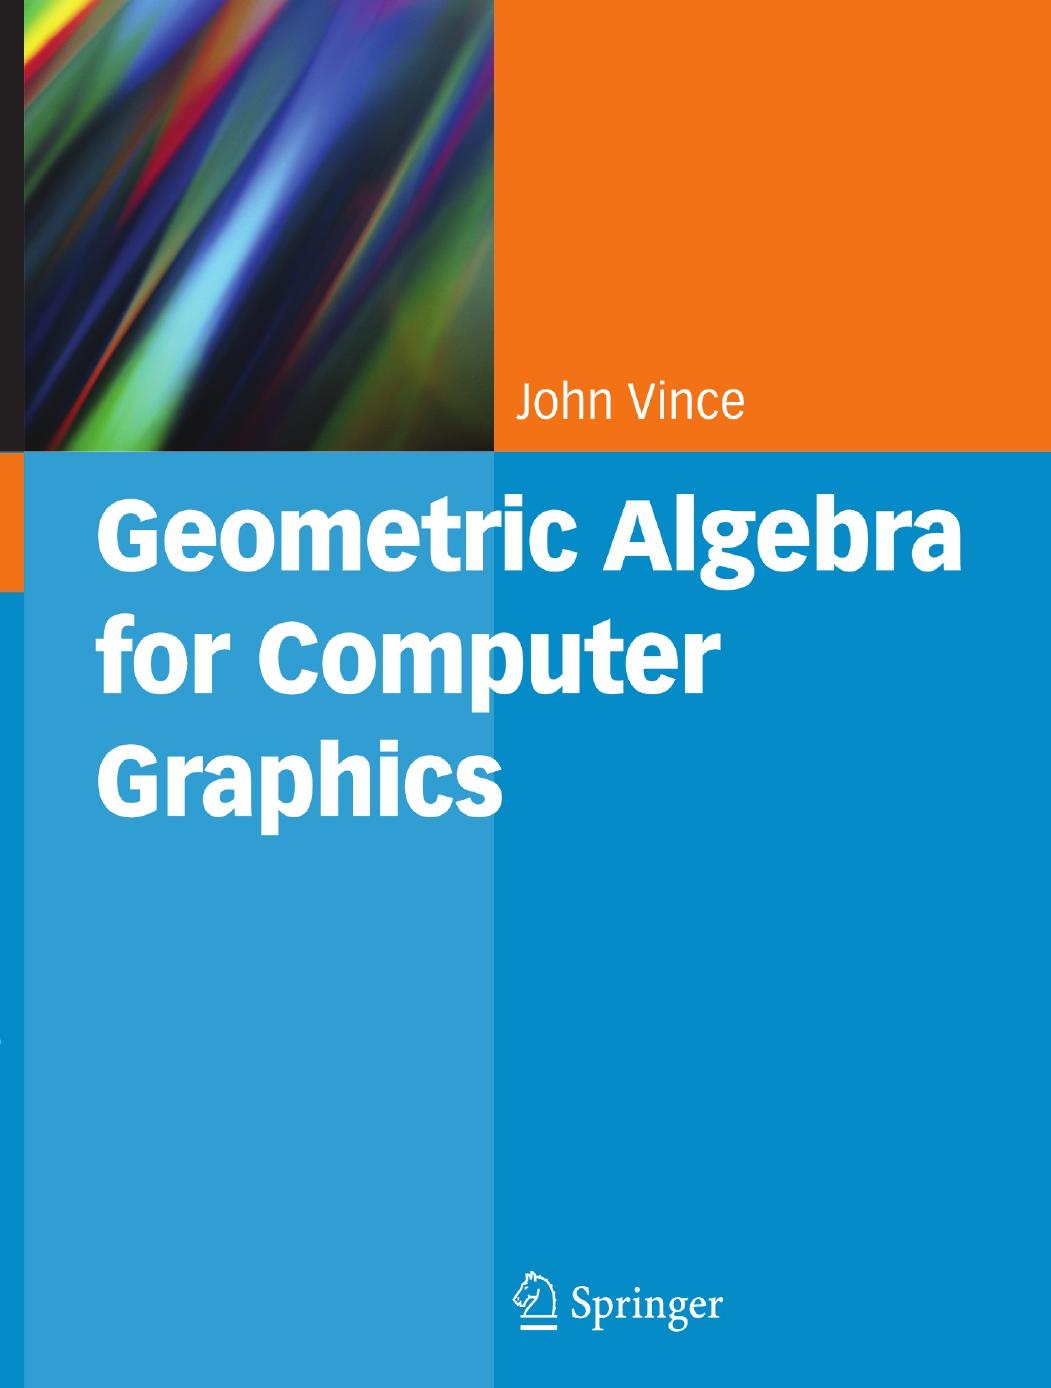 Geometric Algebra for Computer Graphics by John Vince